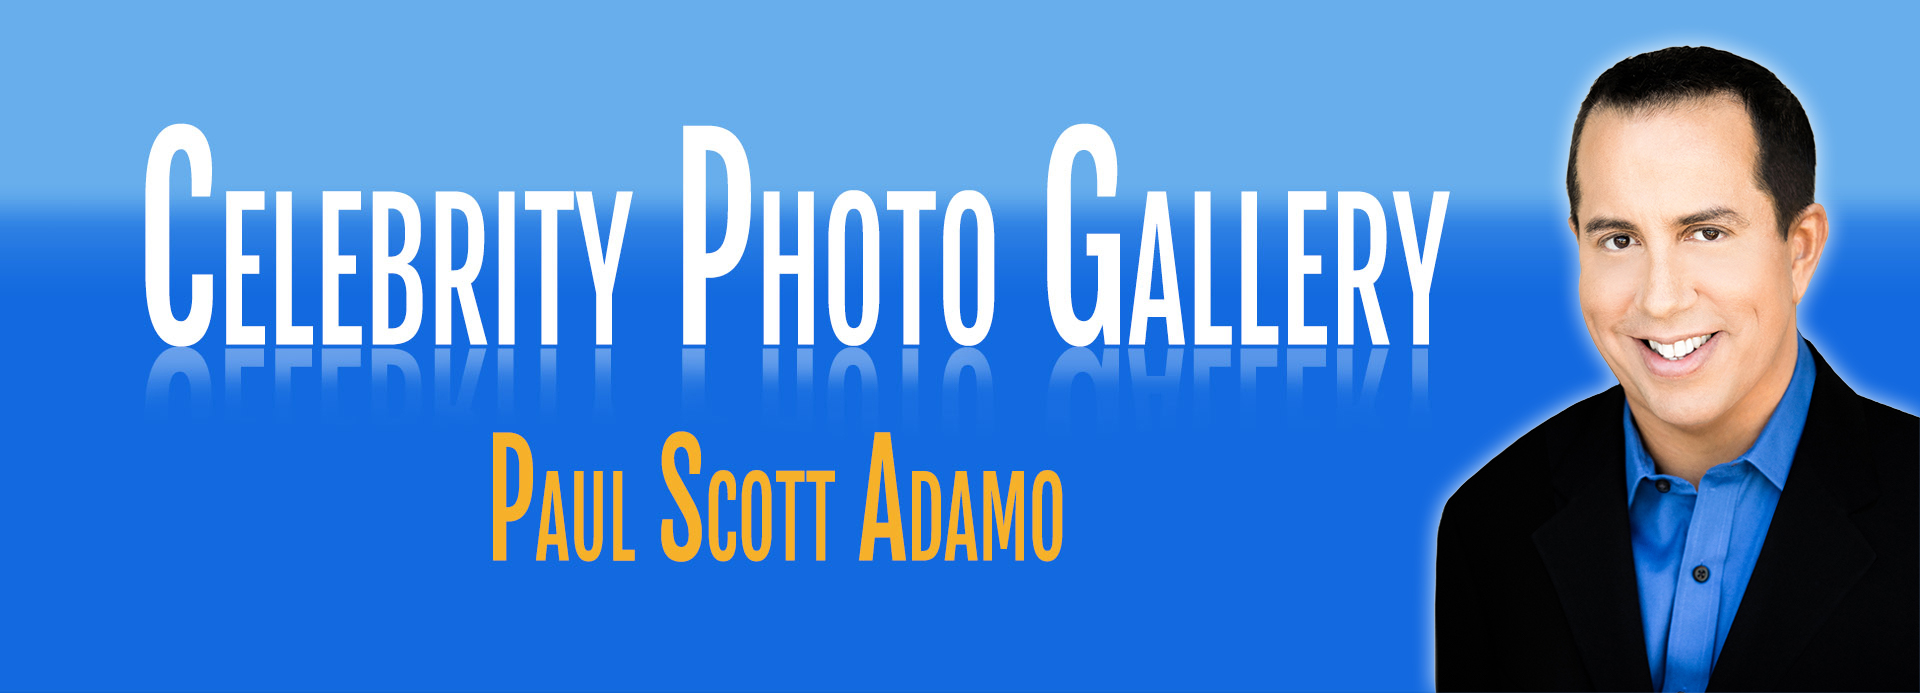 Paul Scott Adamo celebrity photo gallery banner